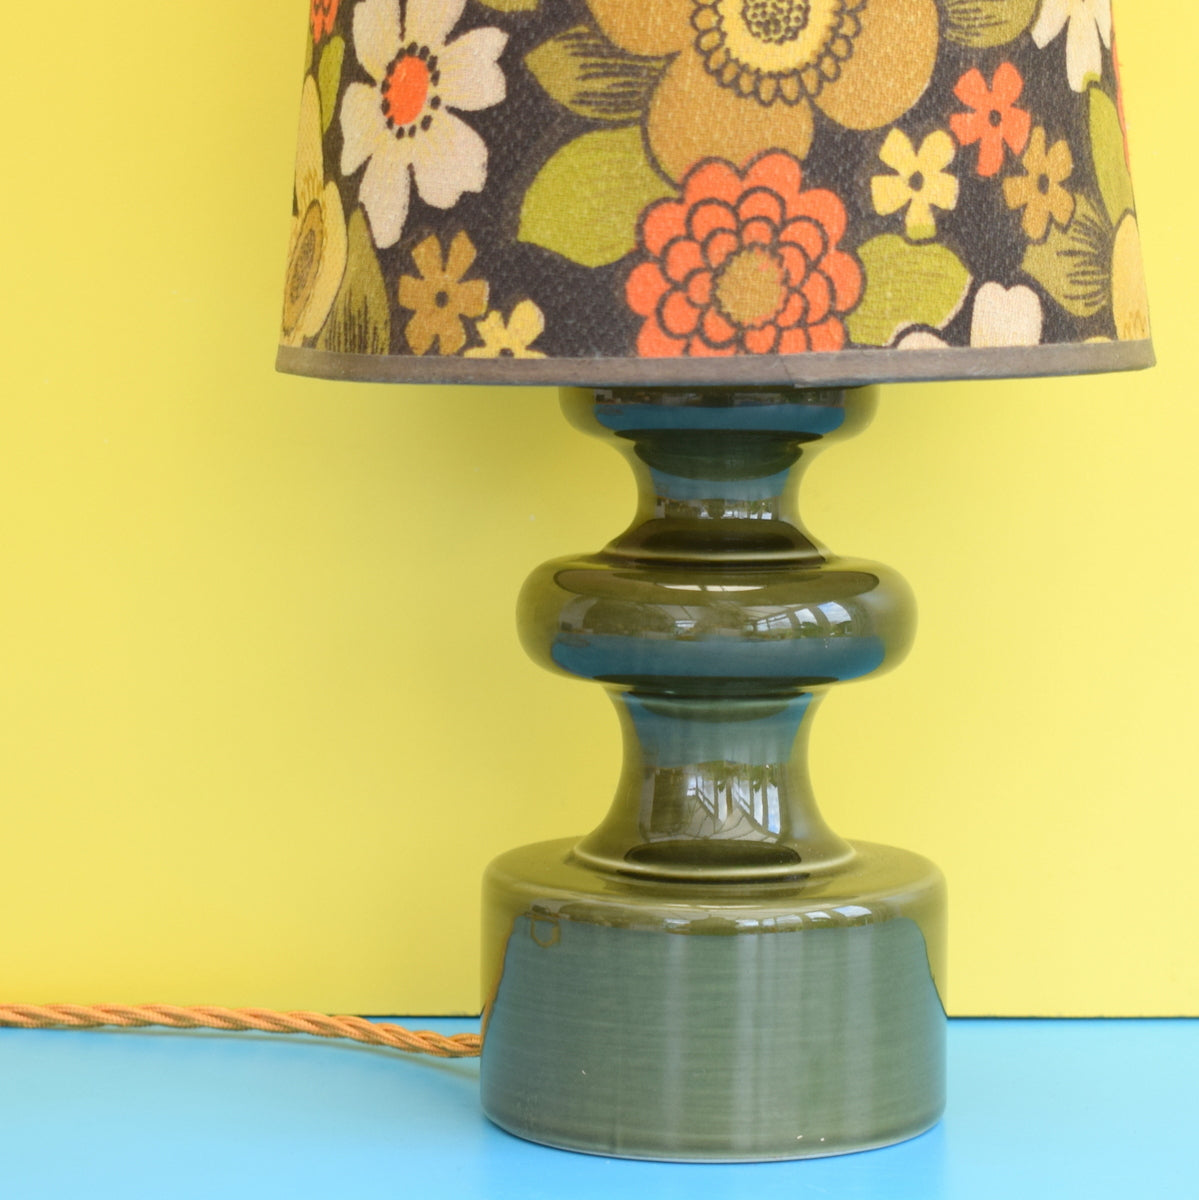 Vintage 1960s Doulton Table Lamp - Original Flower Power Shade, Orange & Brown